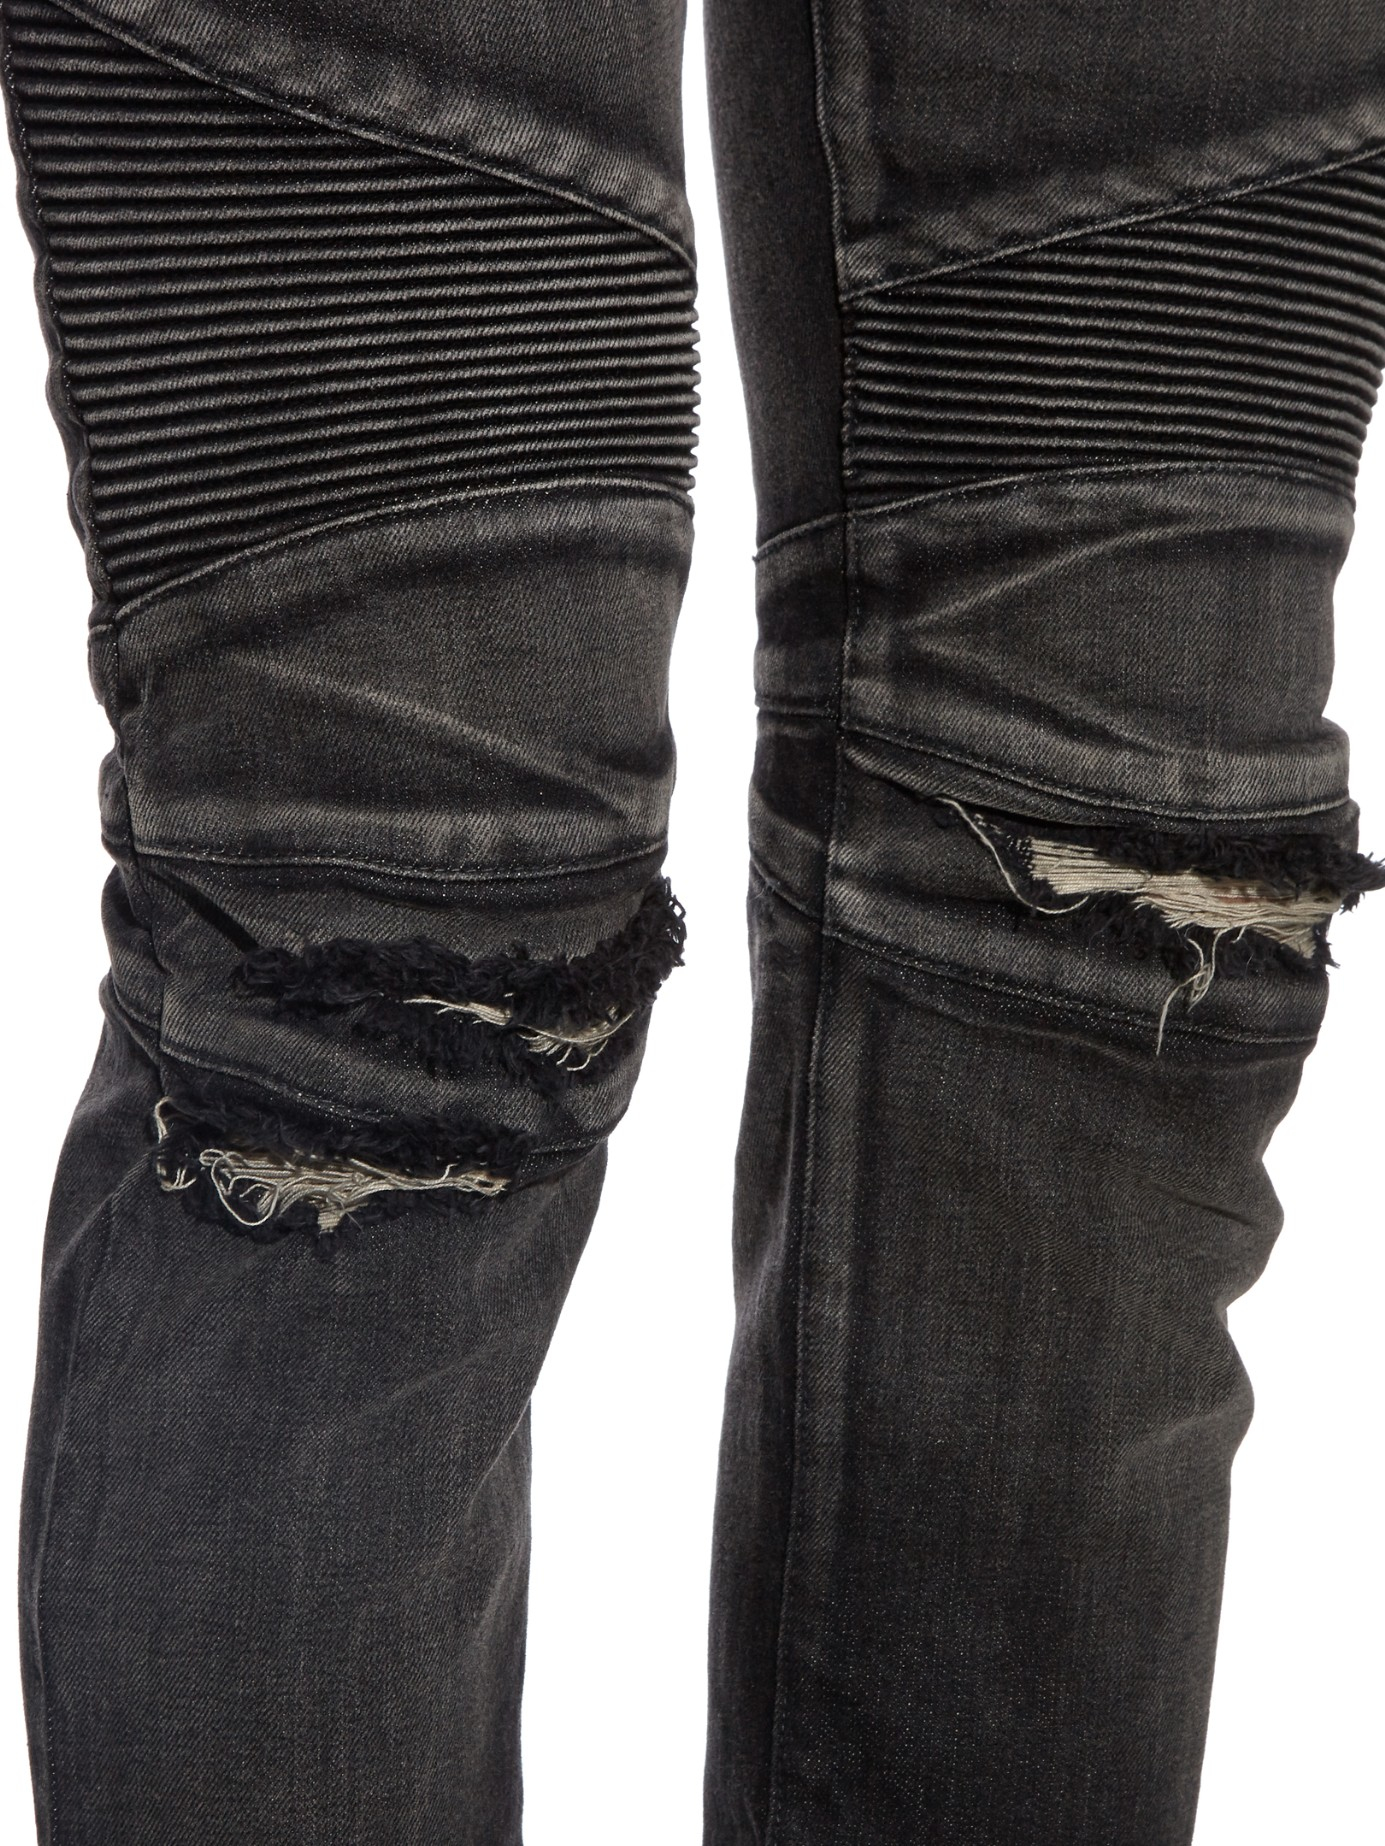 biker jeans mens grey